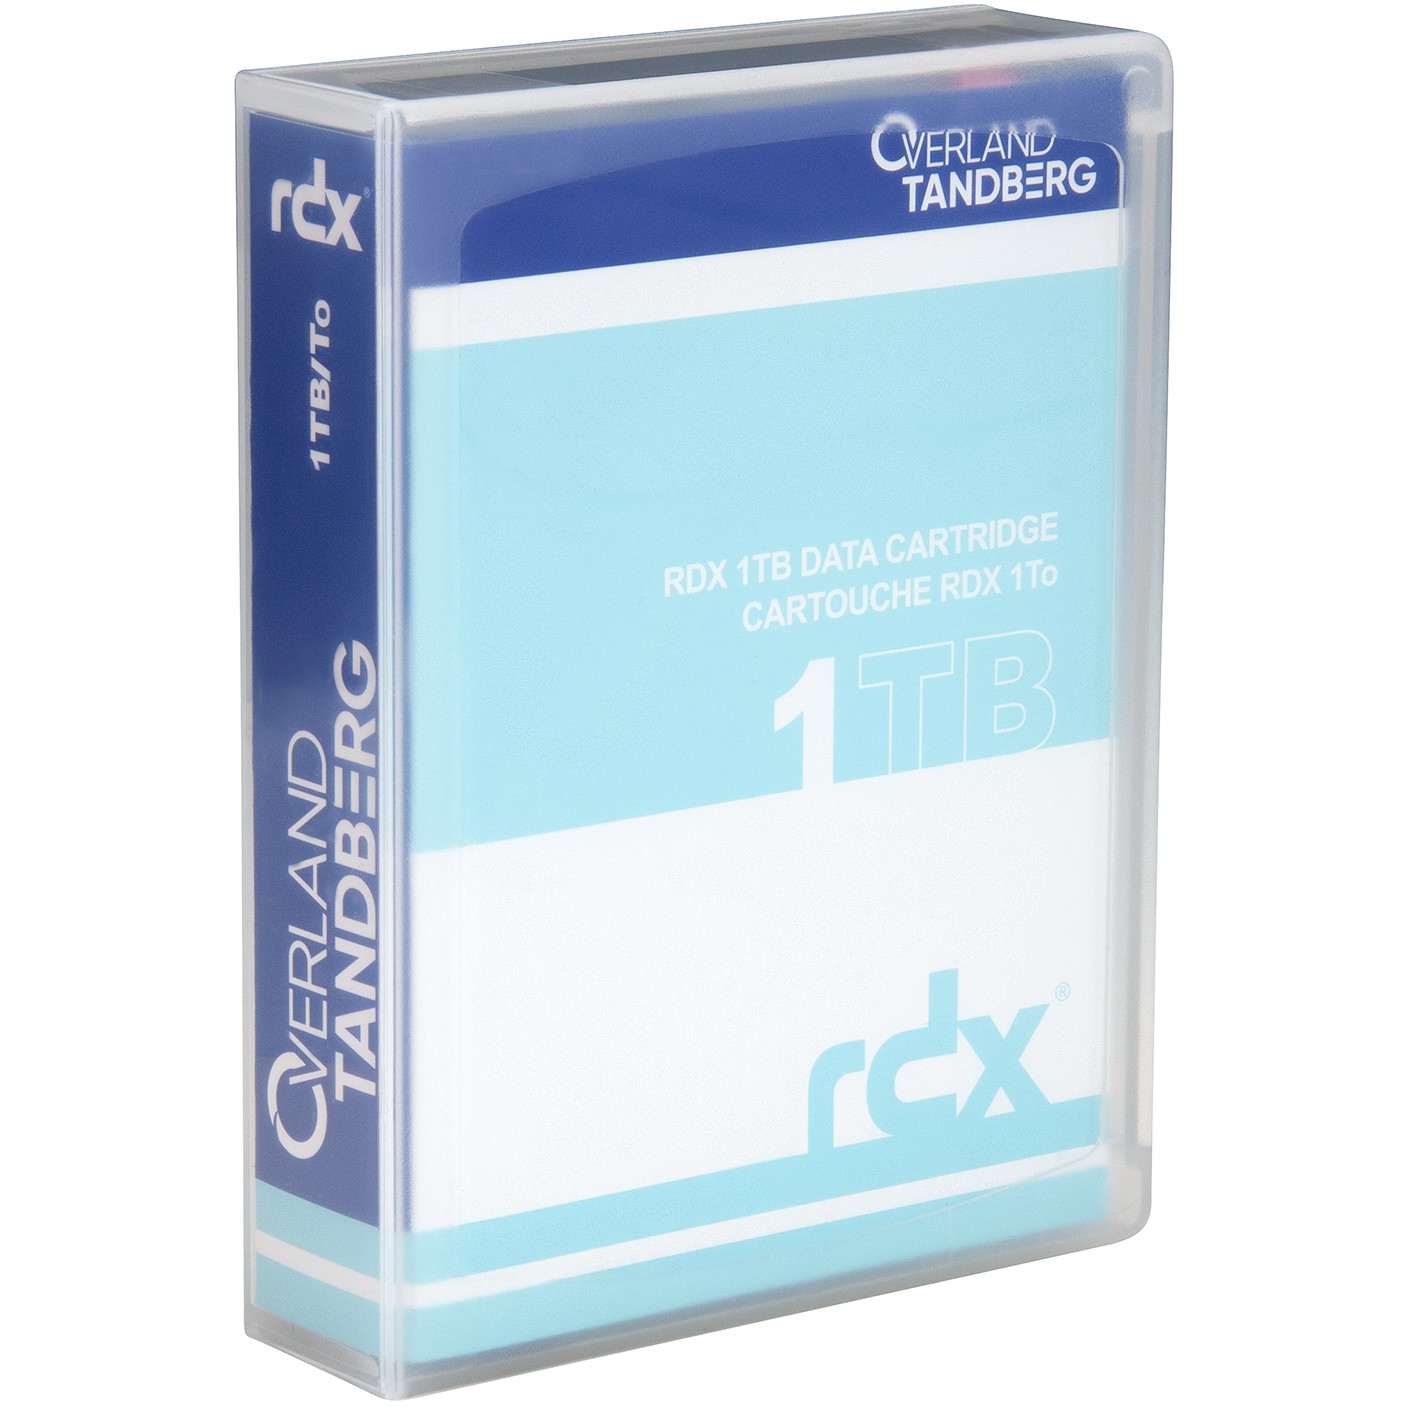 Overland-Tandberg 8586-RDX backup storage media